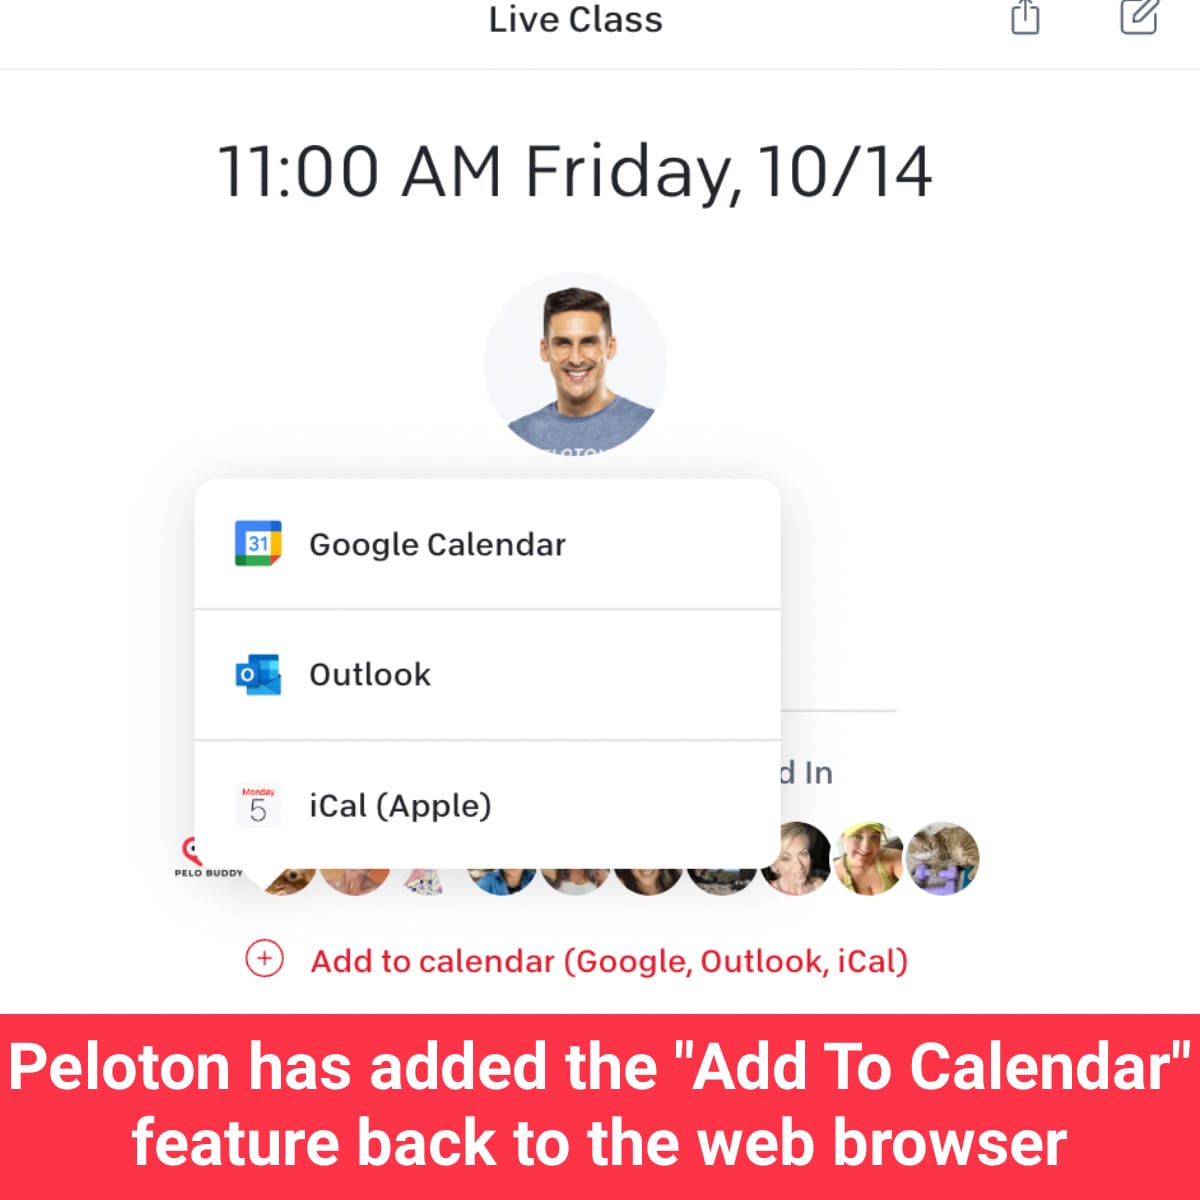 "Add to Calendar" feature restored on Peloton web browser.